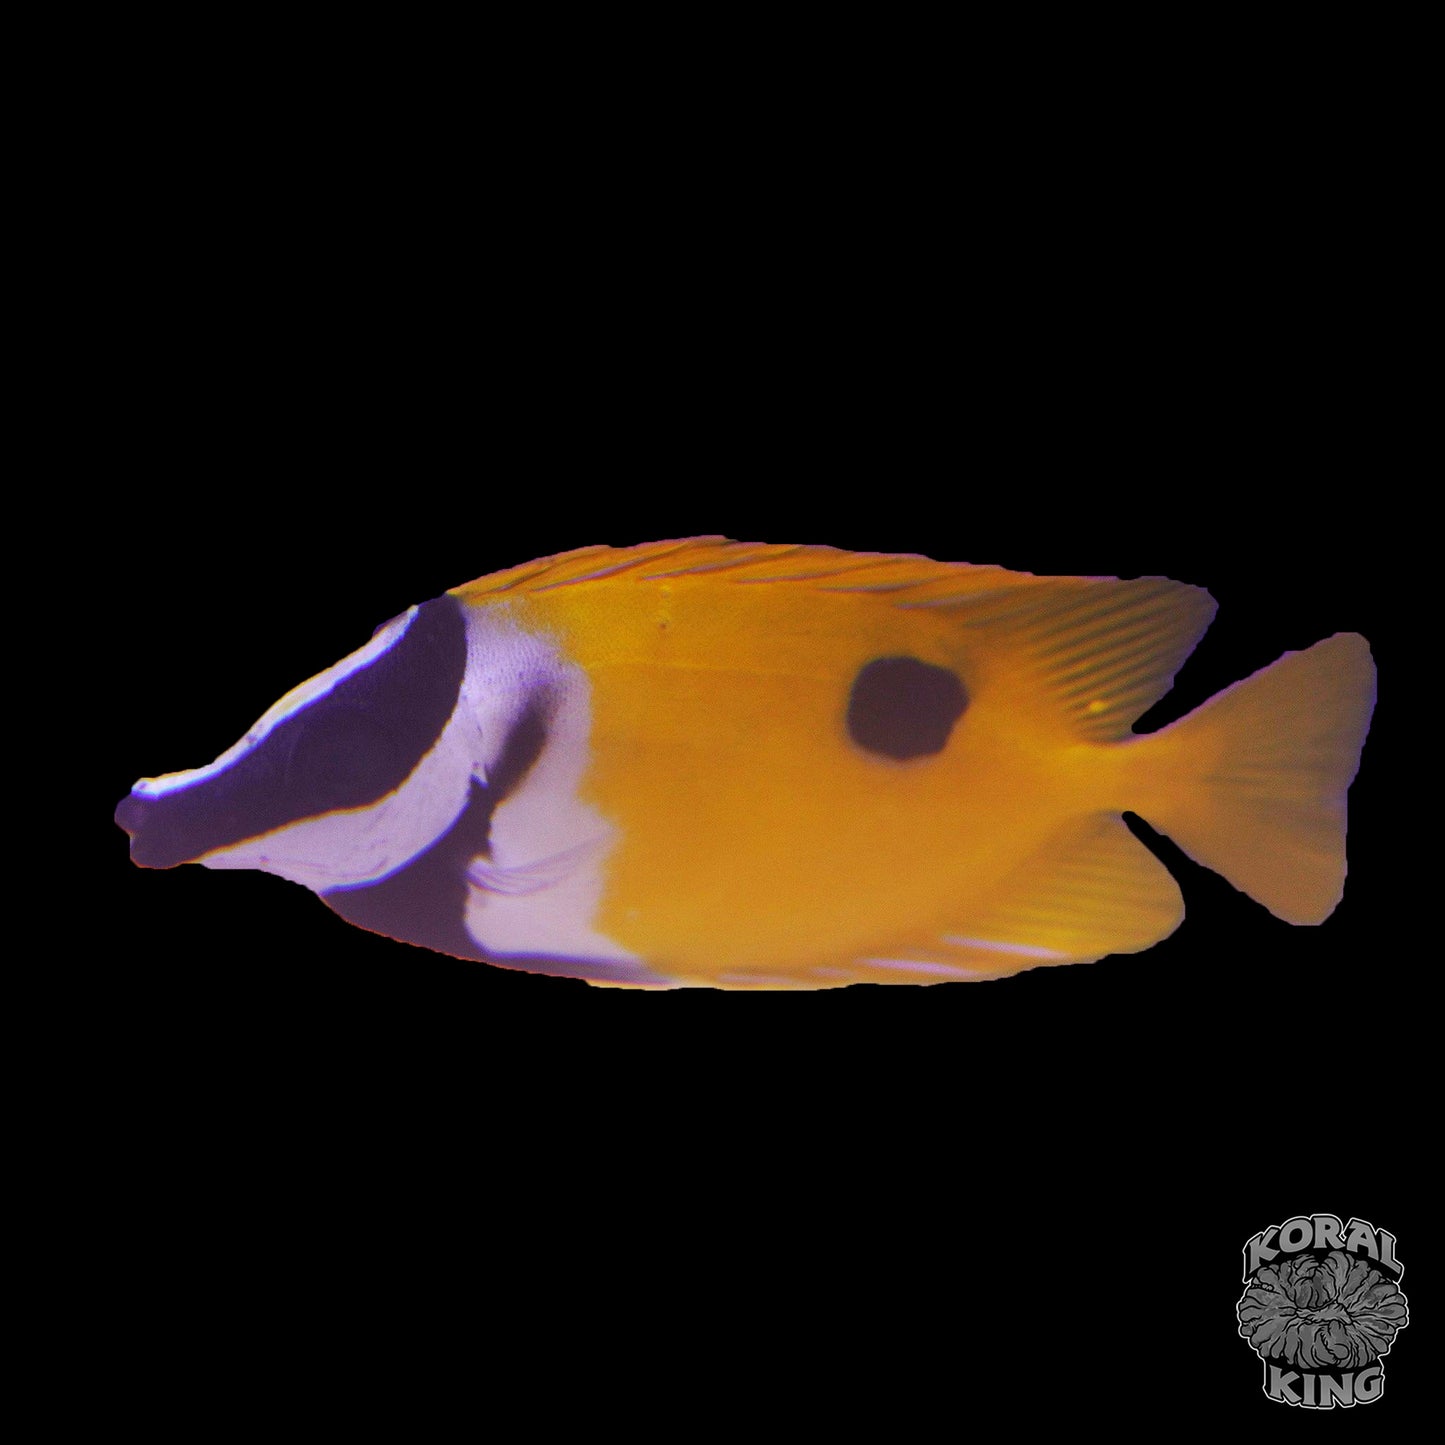 One Spot Foxface Rabbitfish - Koral King